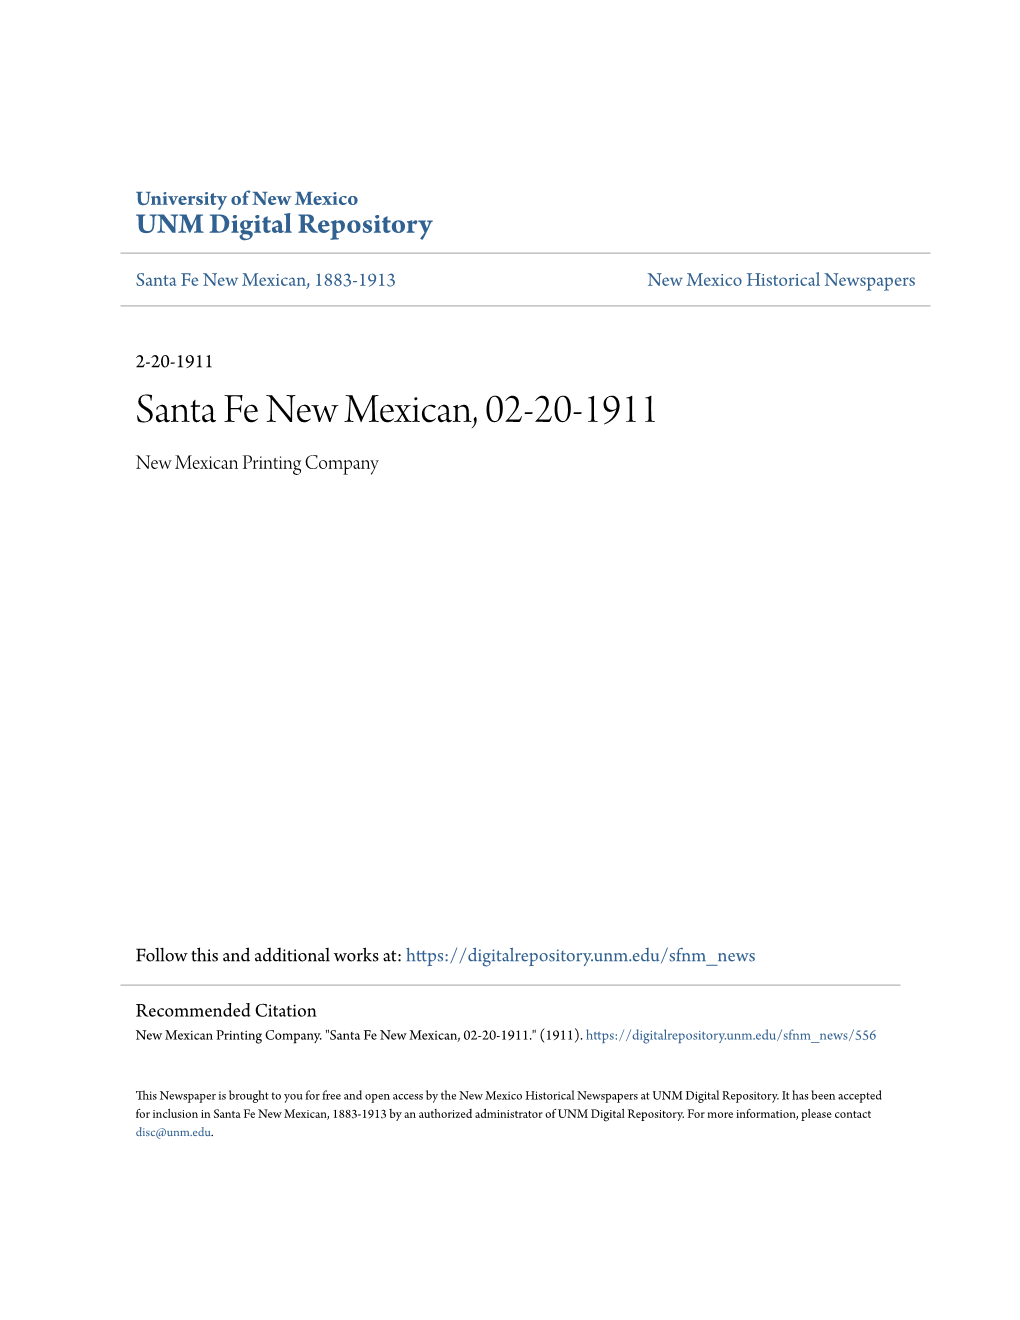 Santa Fe New Mexican, 02-20-1911 New Mexican Printing Company